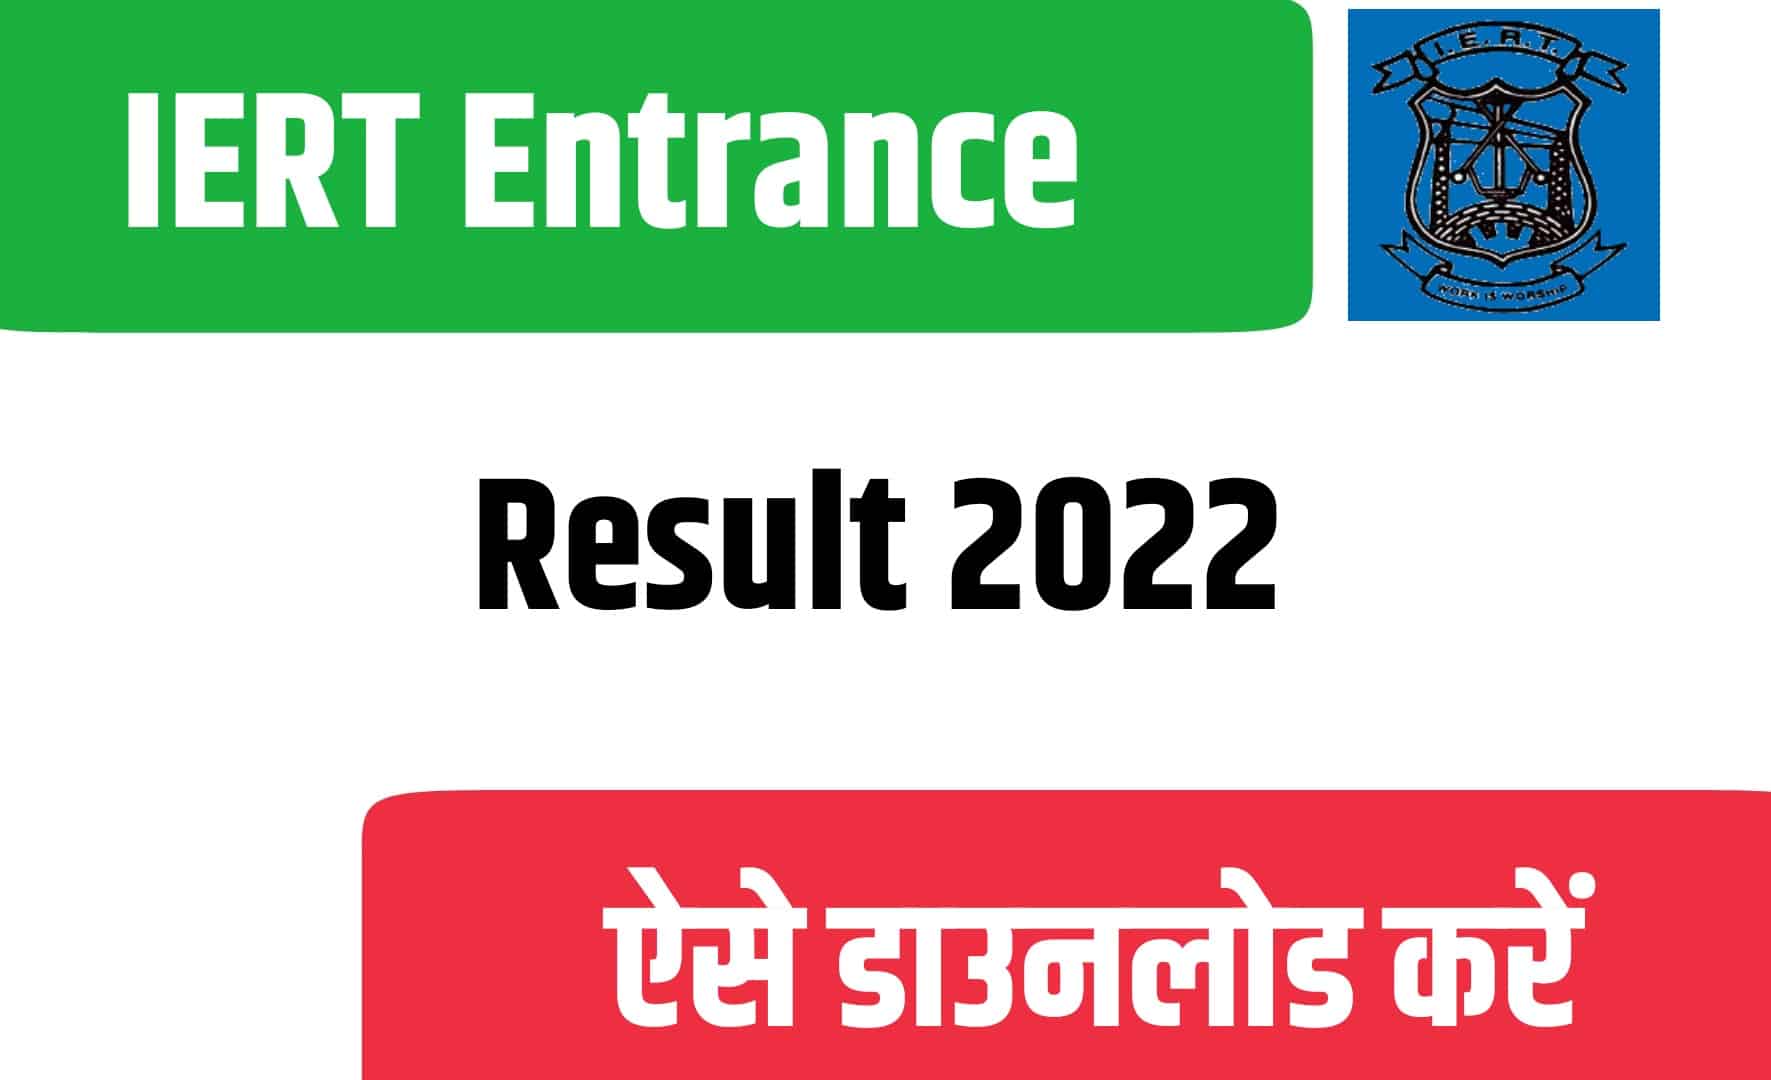 IERT Entrance Result 2022